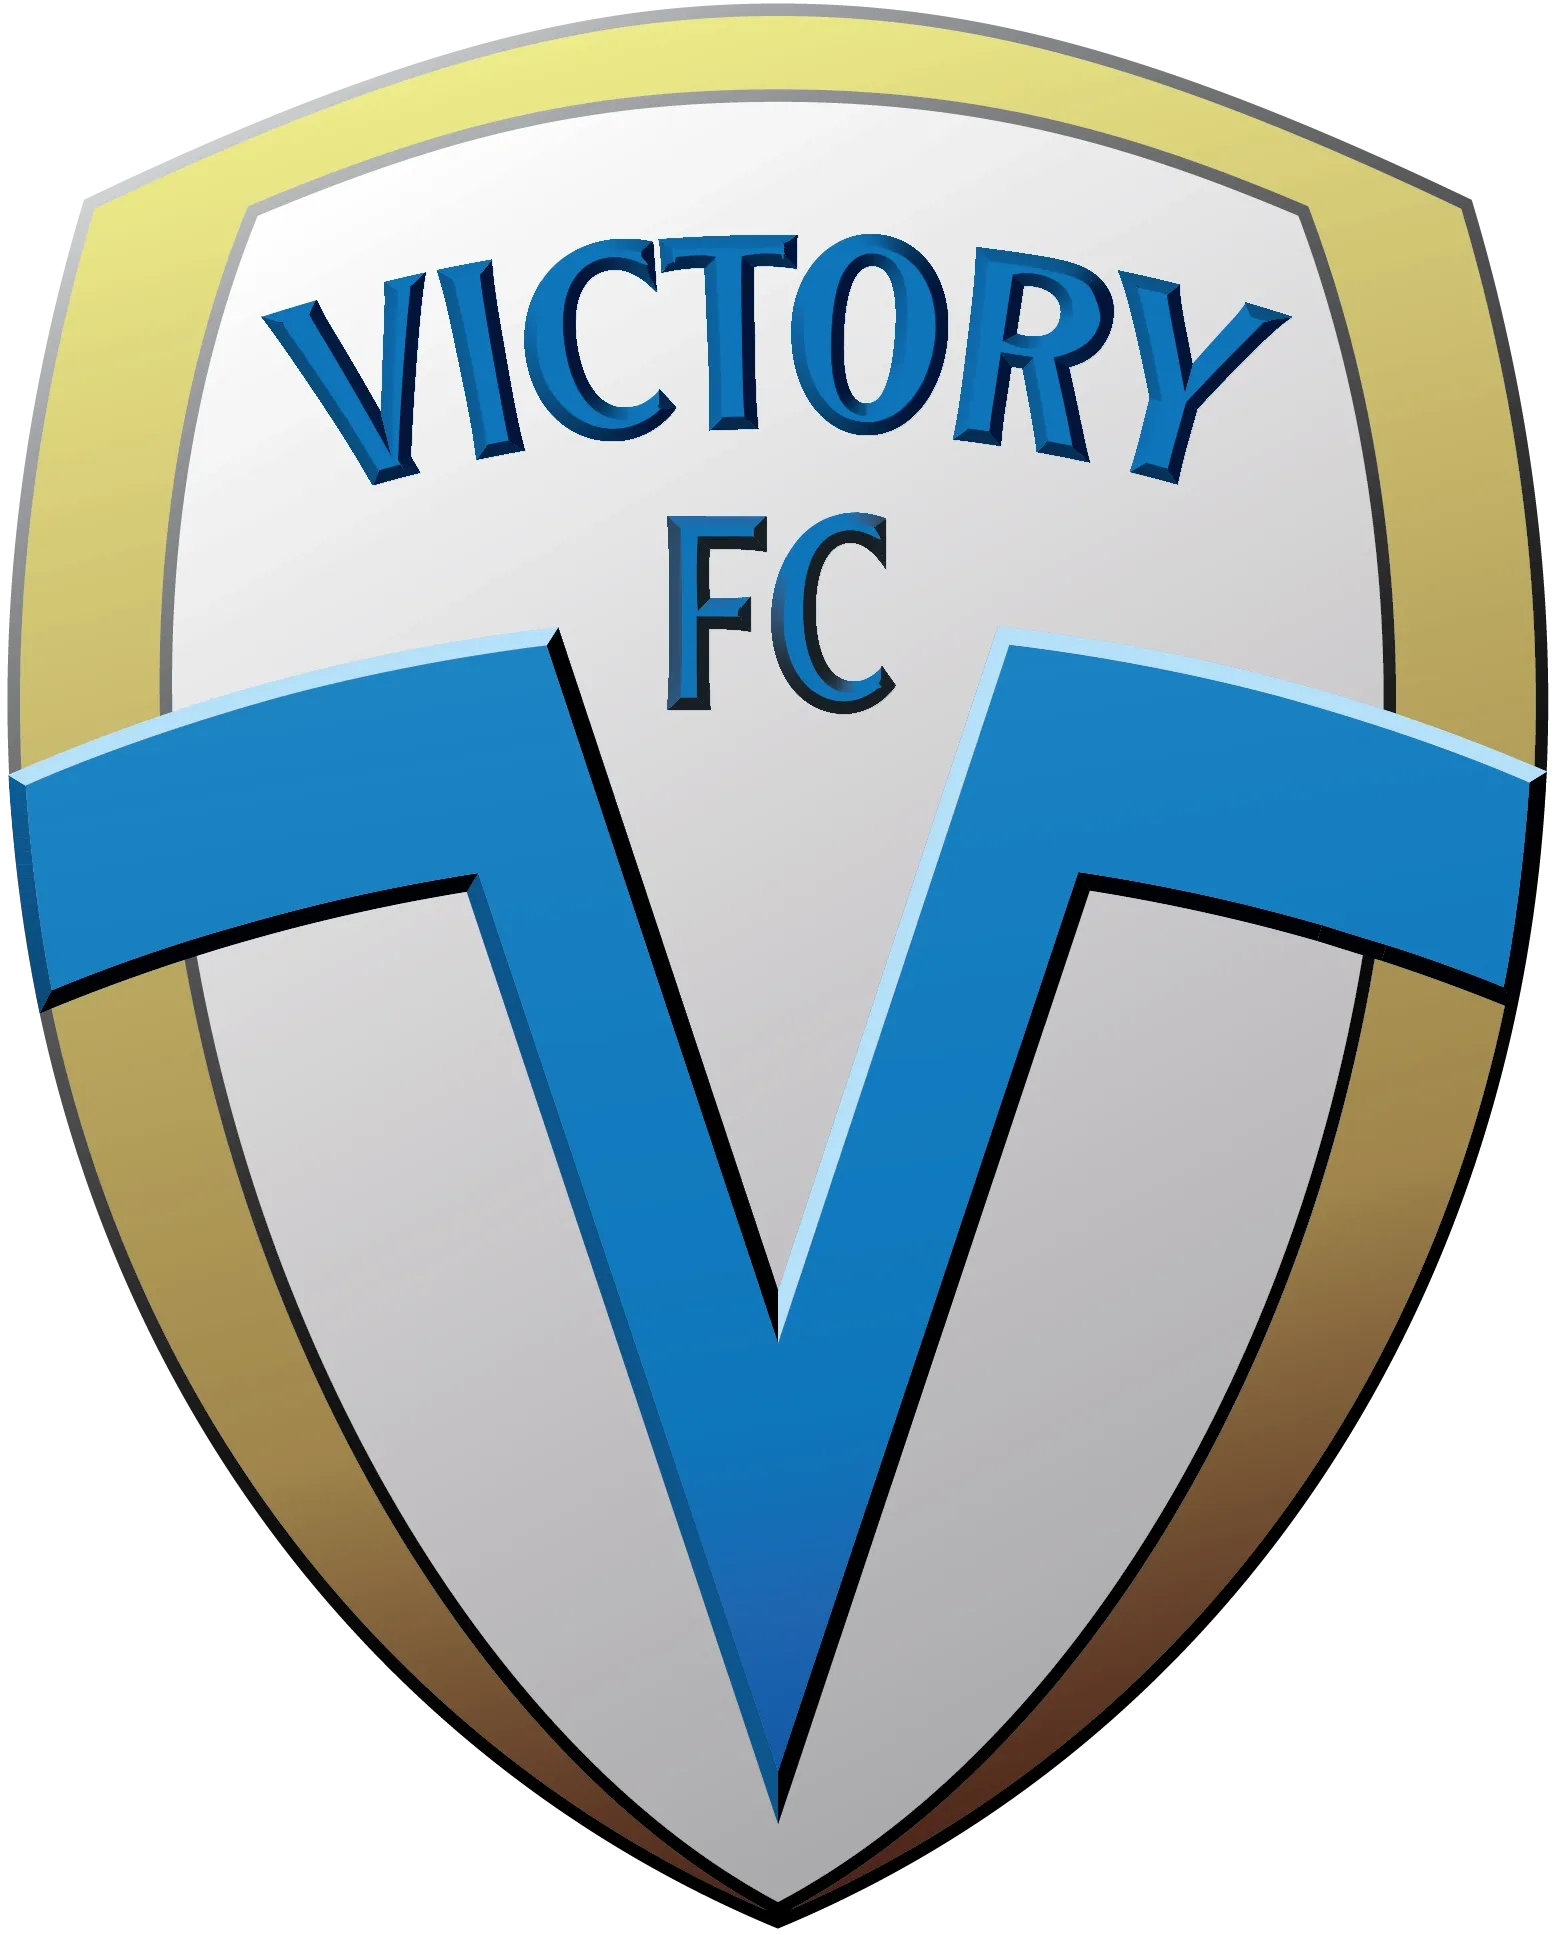 Victory Football Club and Academy logo